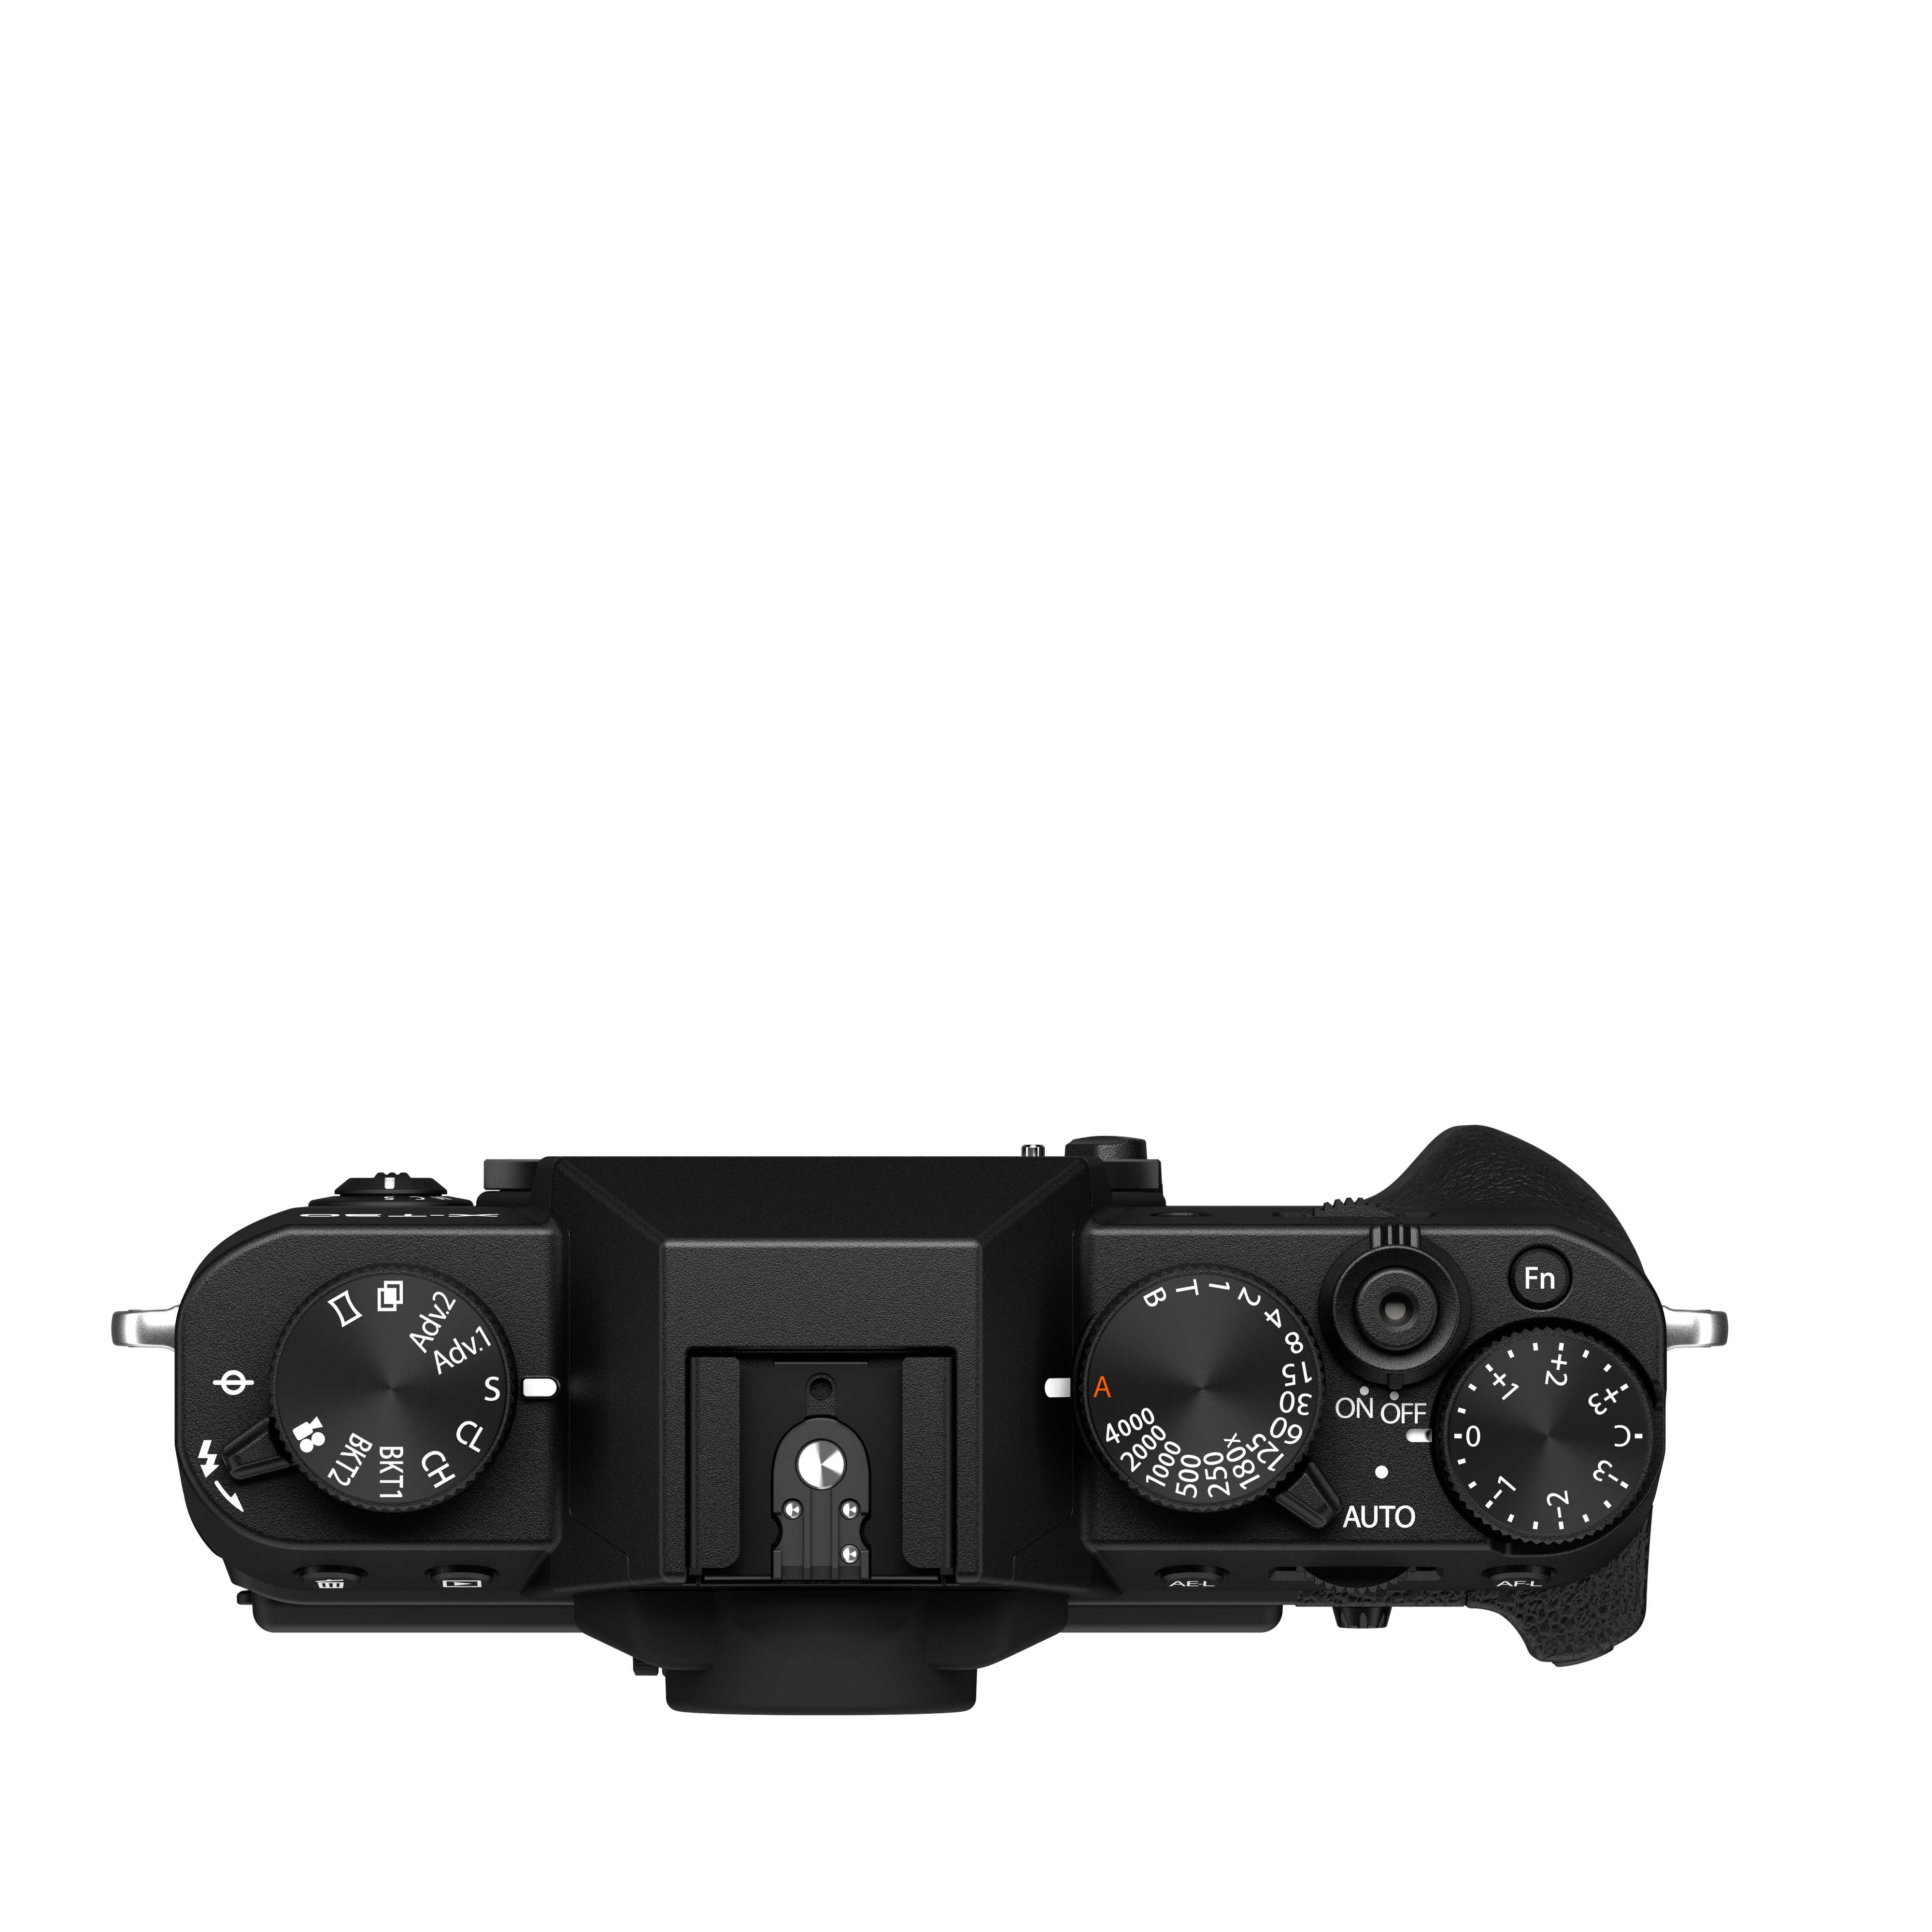 Fuji X-T30 II inkl. XF 18-55 mm Kit schwarz Bild 05